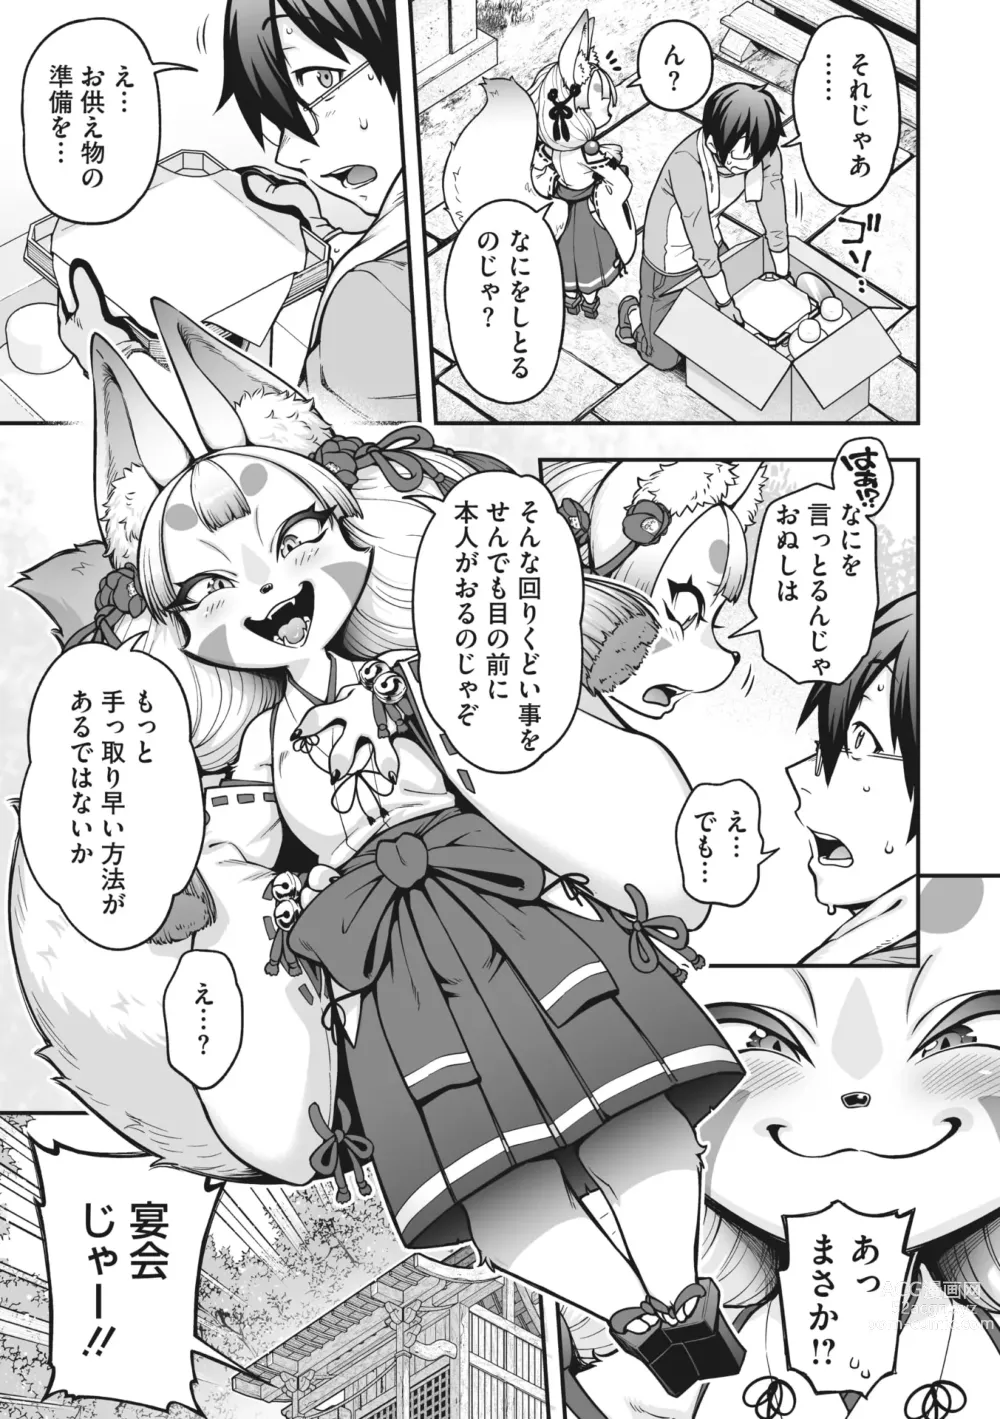 Page 7 of manga COMIC GAIRA Vol. 15